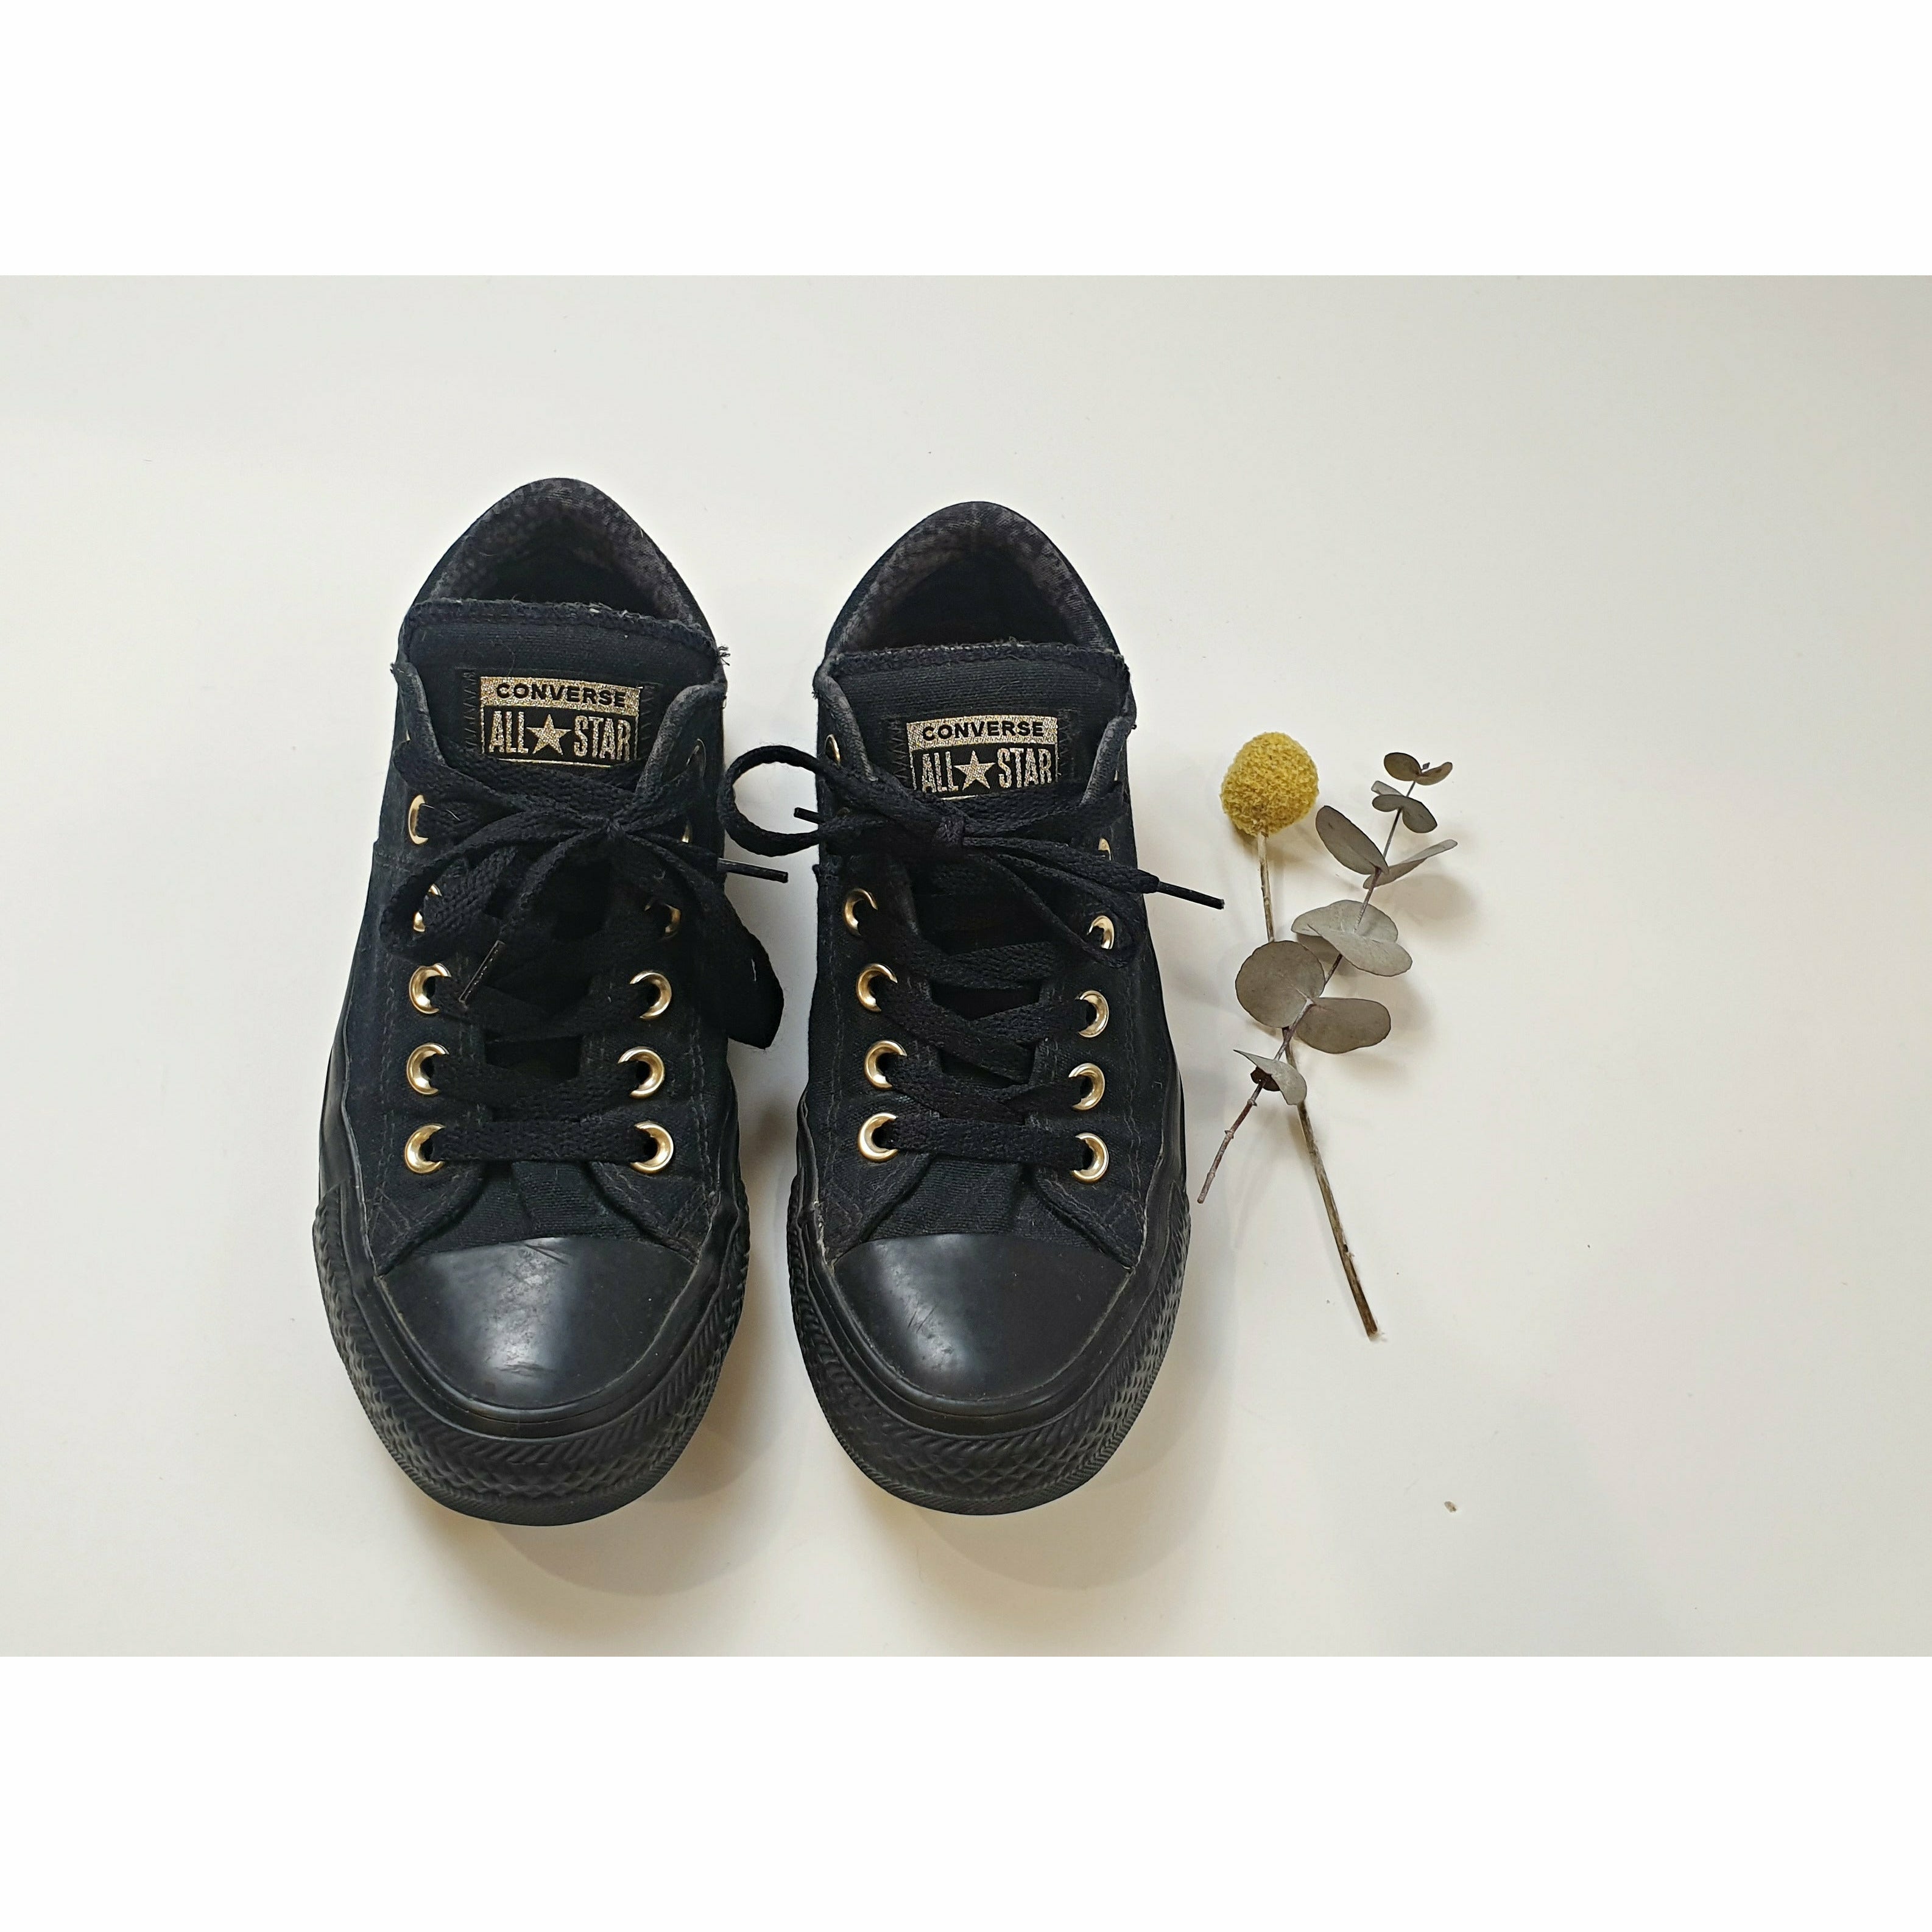 Converse classic black up shoes size UK 5 / US – Dear Panko